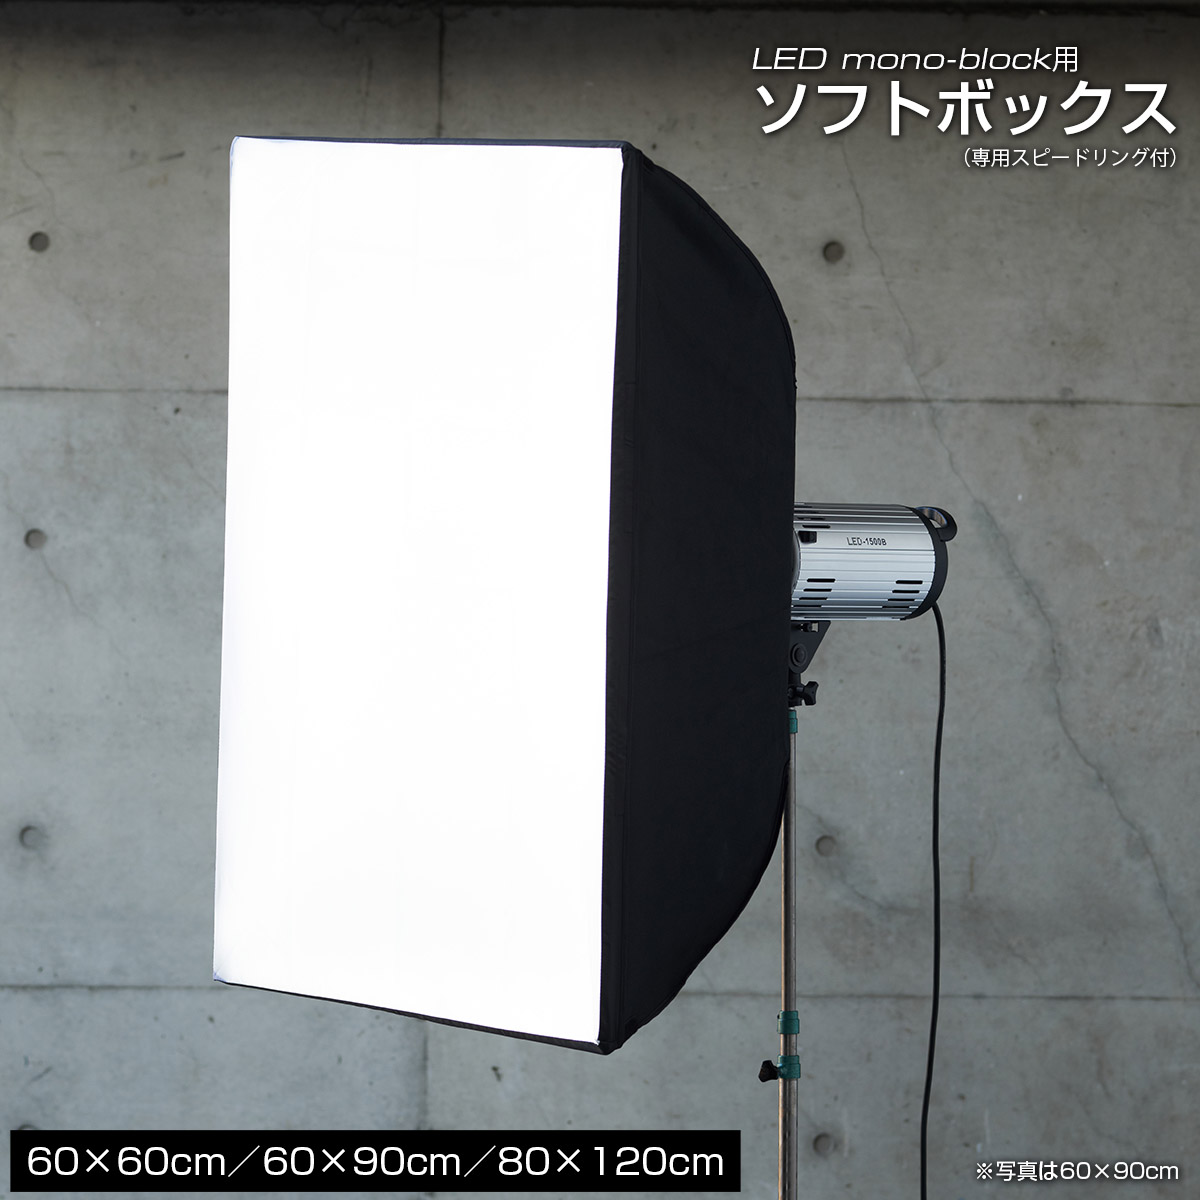 LED mono-block_SoftBox-001